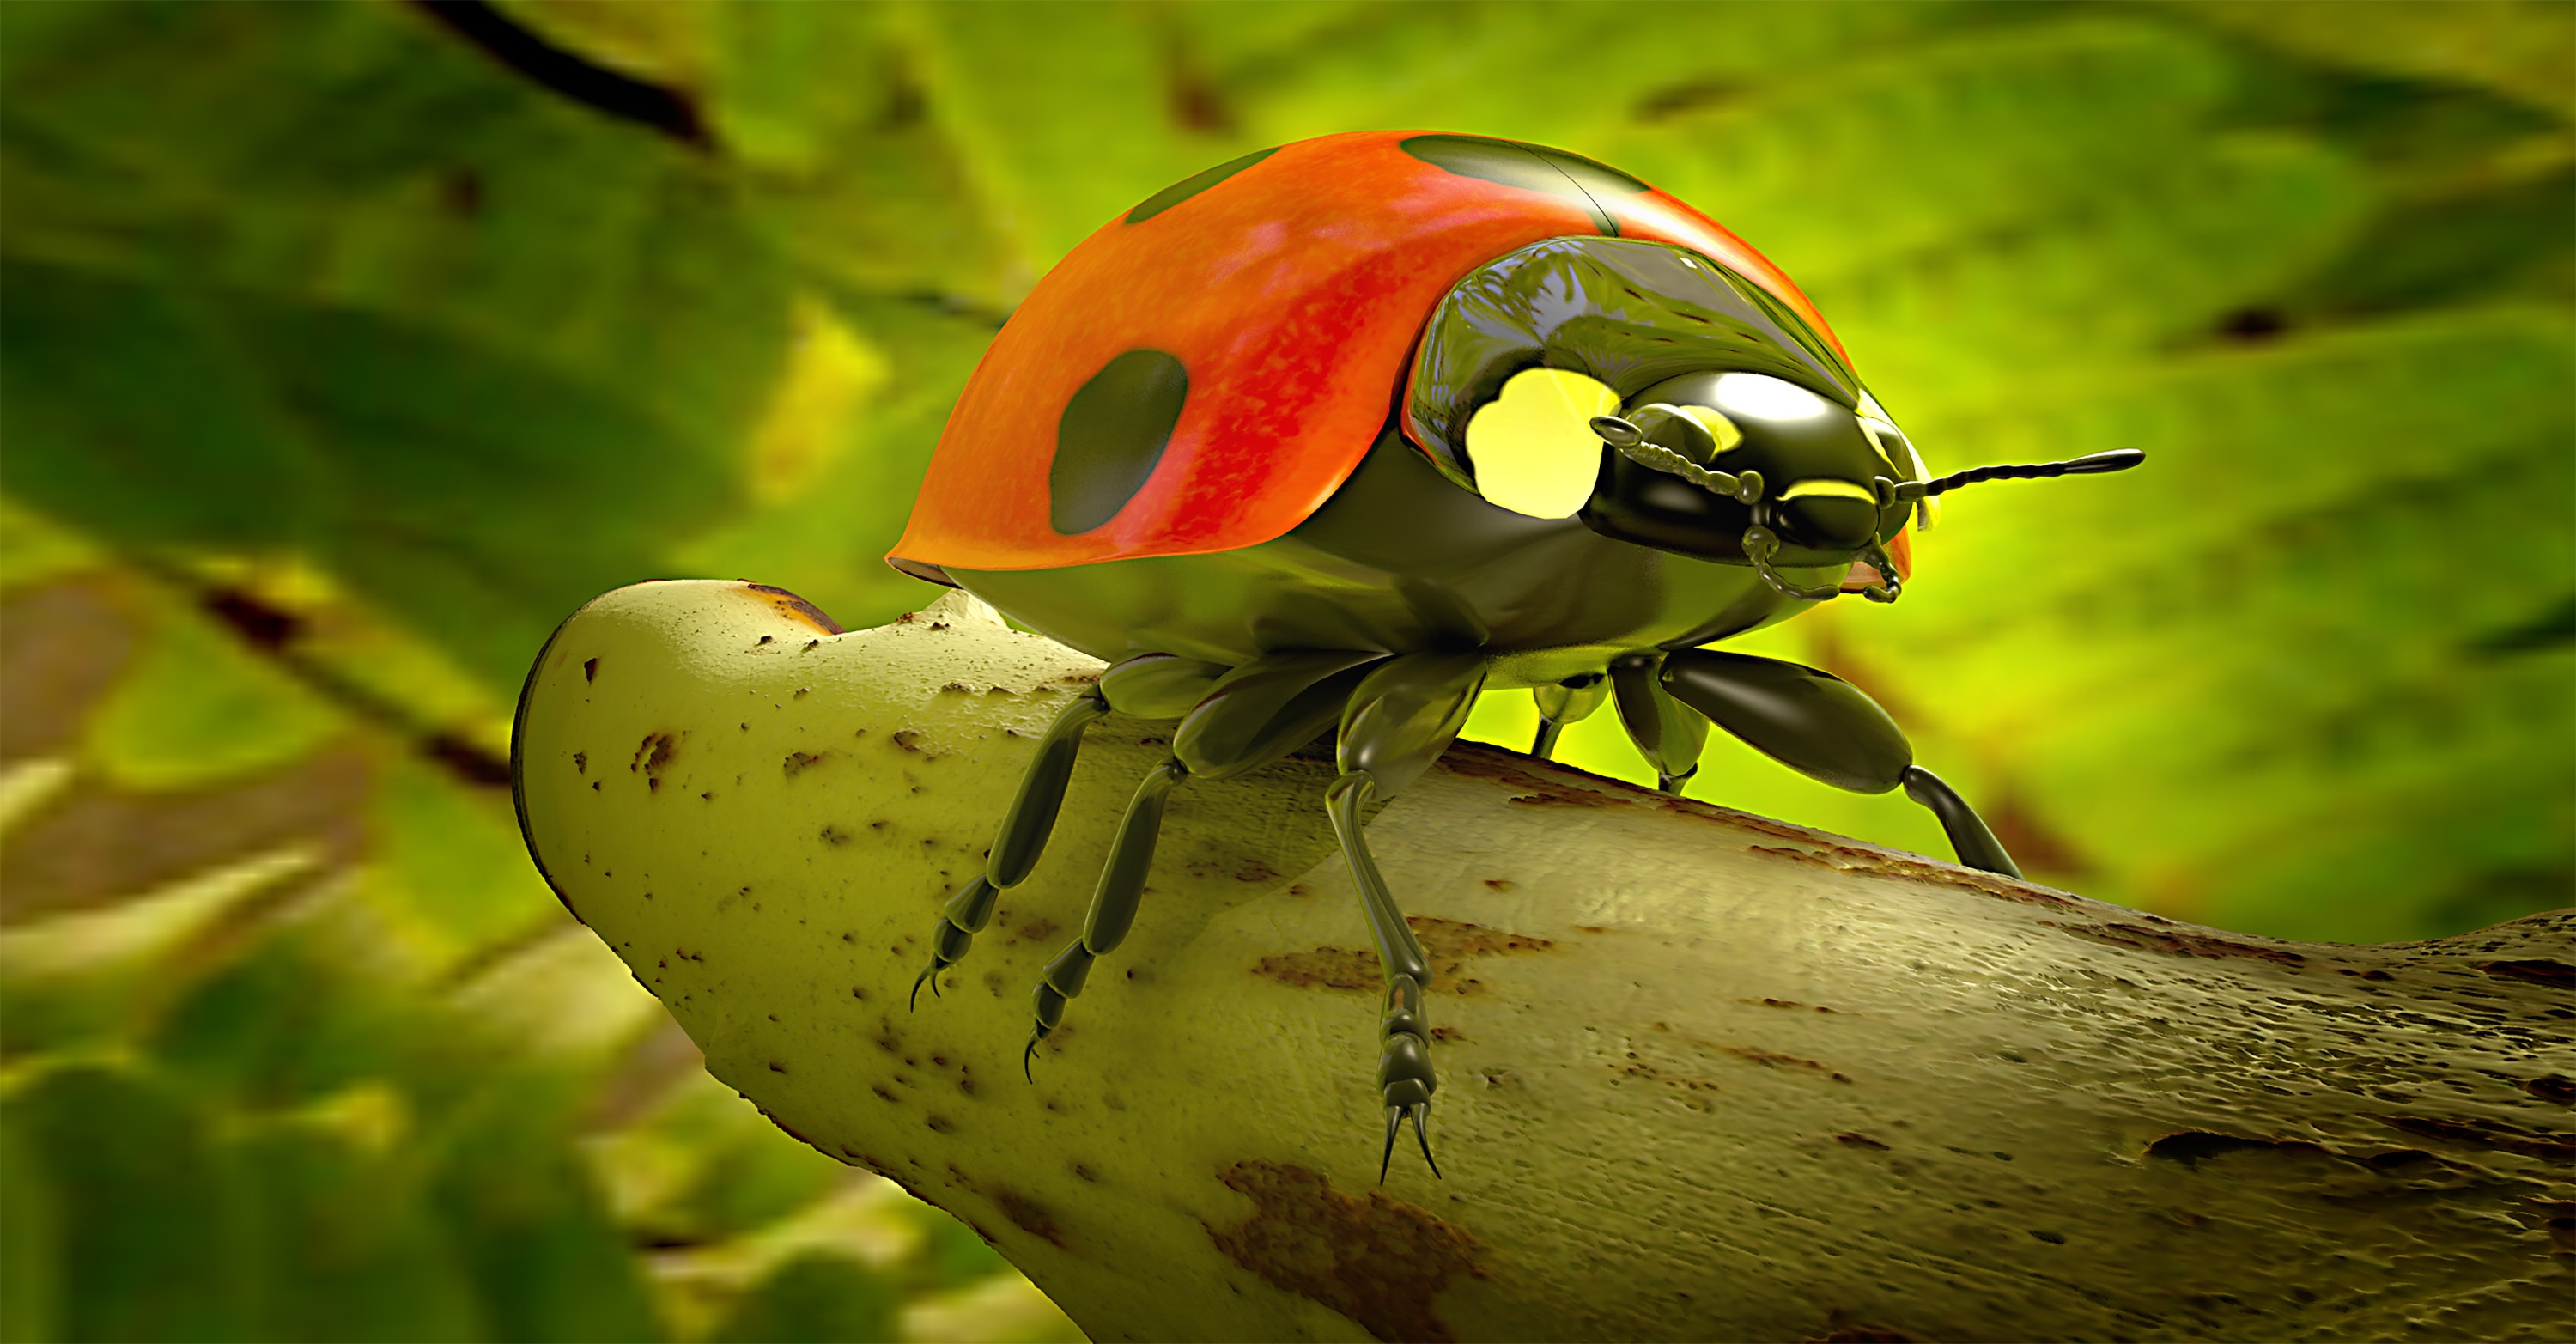 Ladybug closeup on a branch · free photo